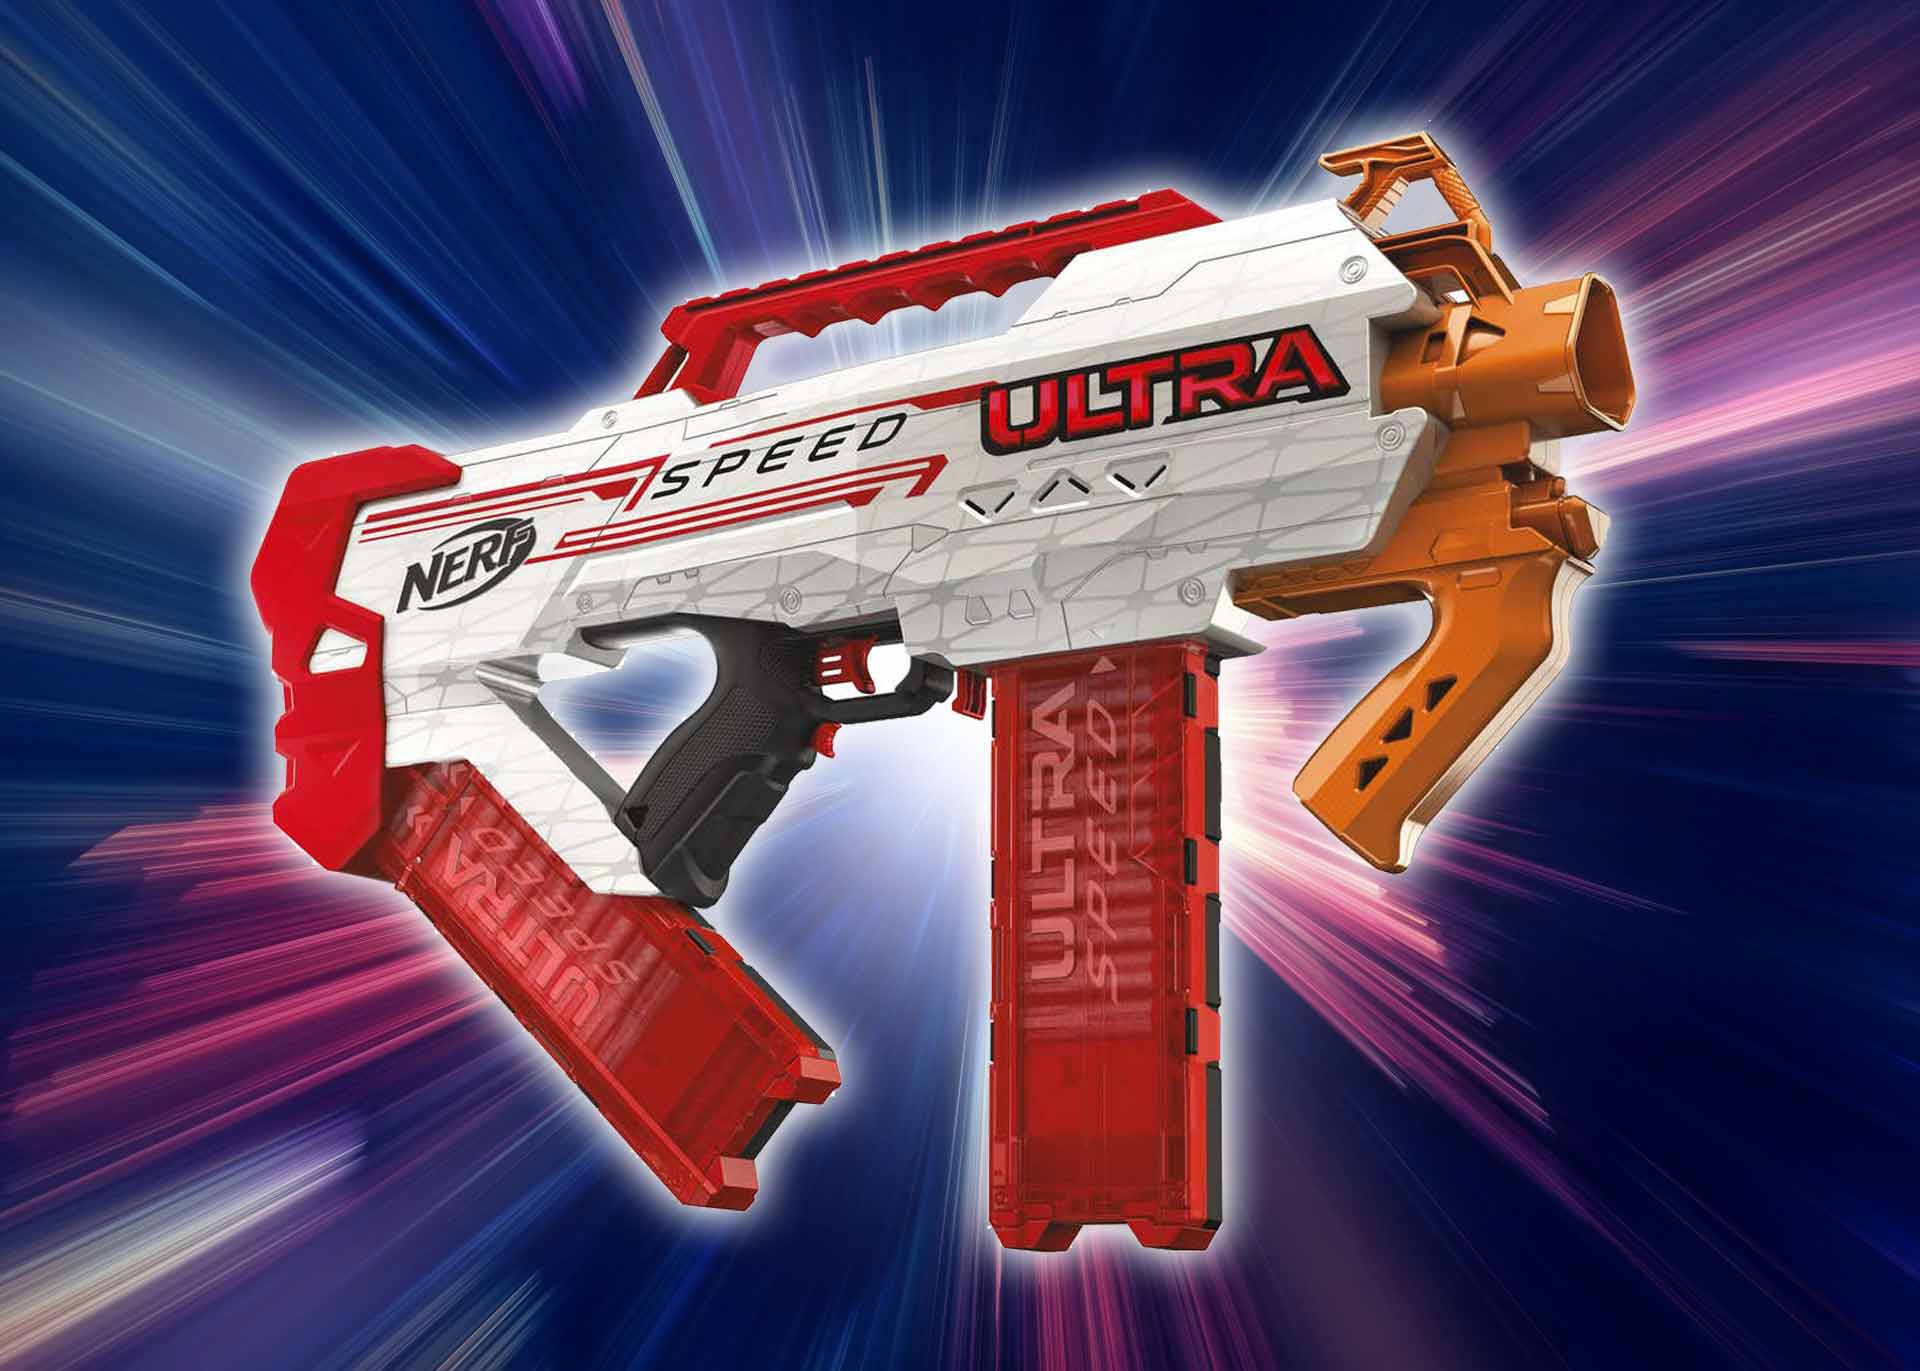 Hasbro's Nerf Speed Ultra Is The Fastest Firing Nerf Blaster